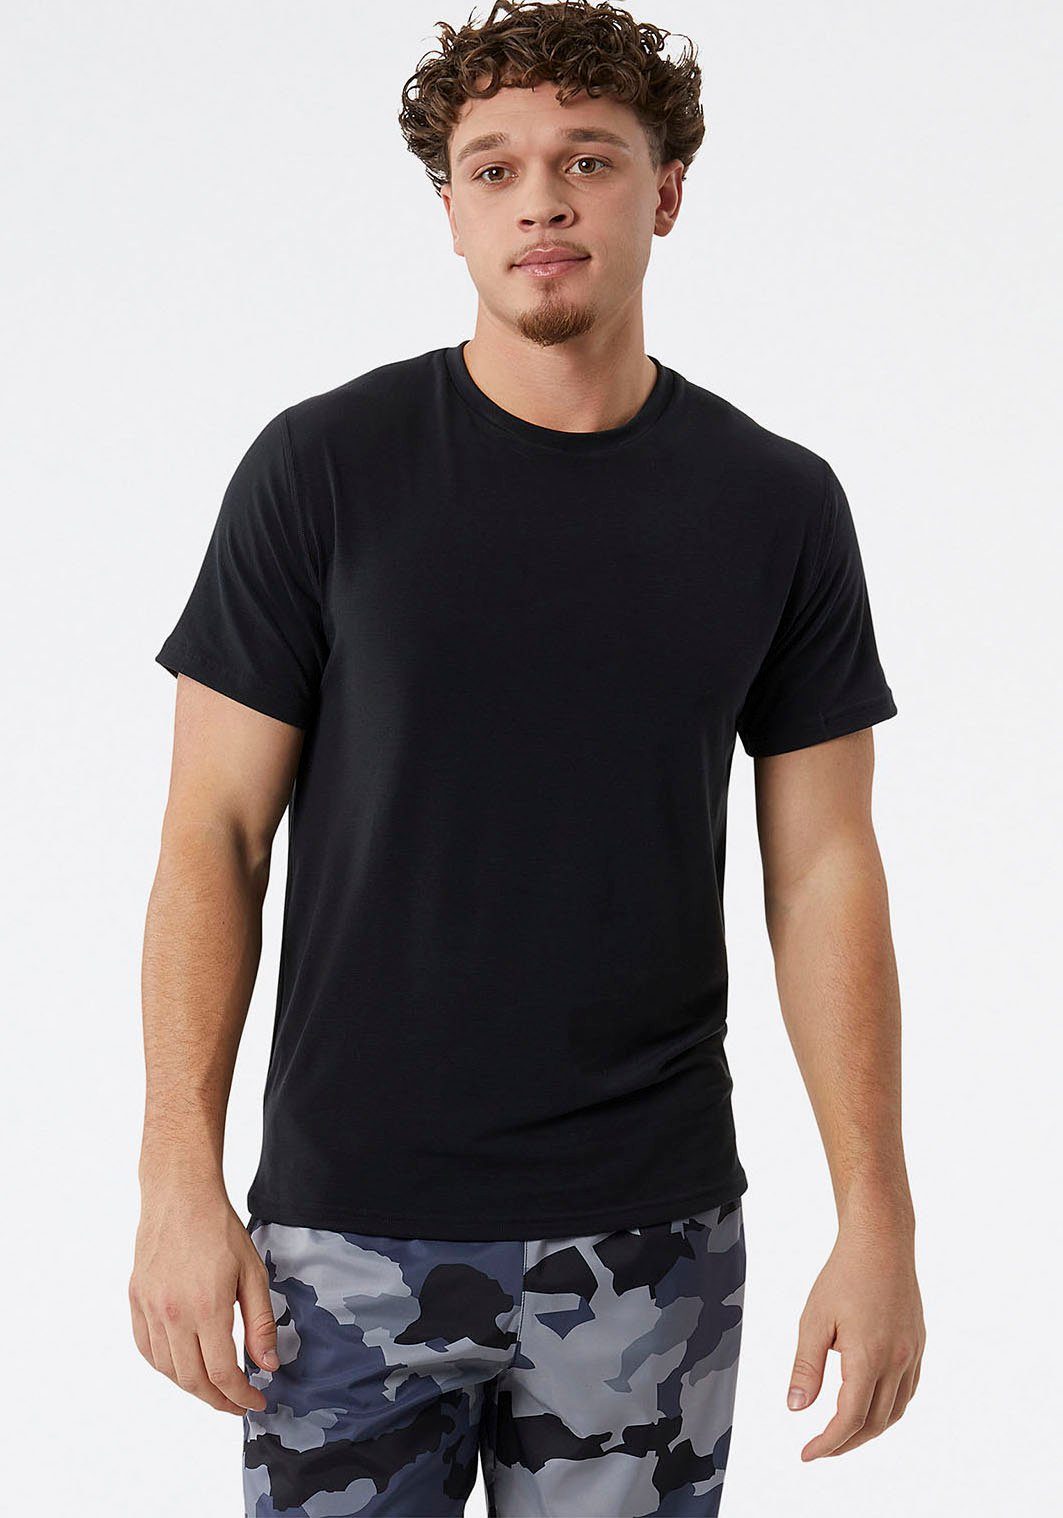 New Balance T-Shirt Black